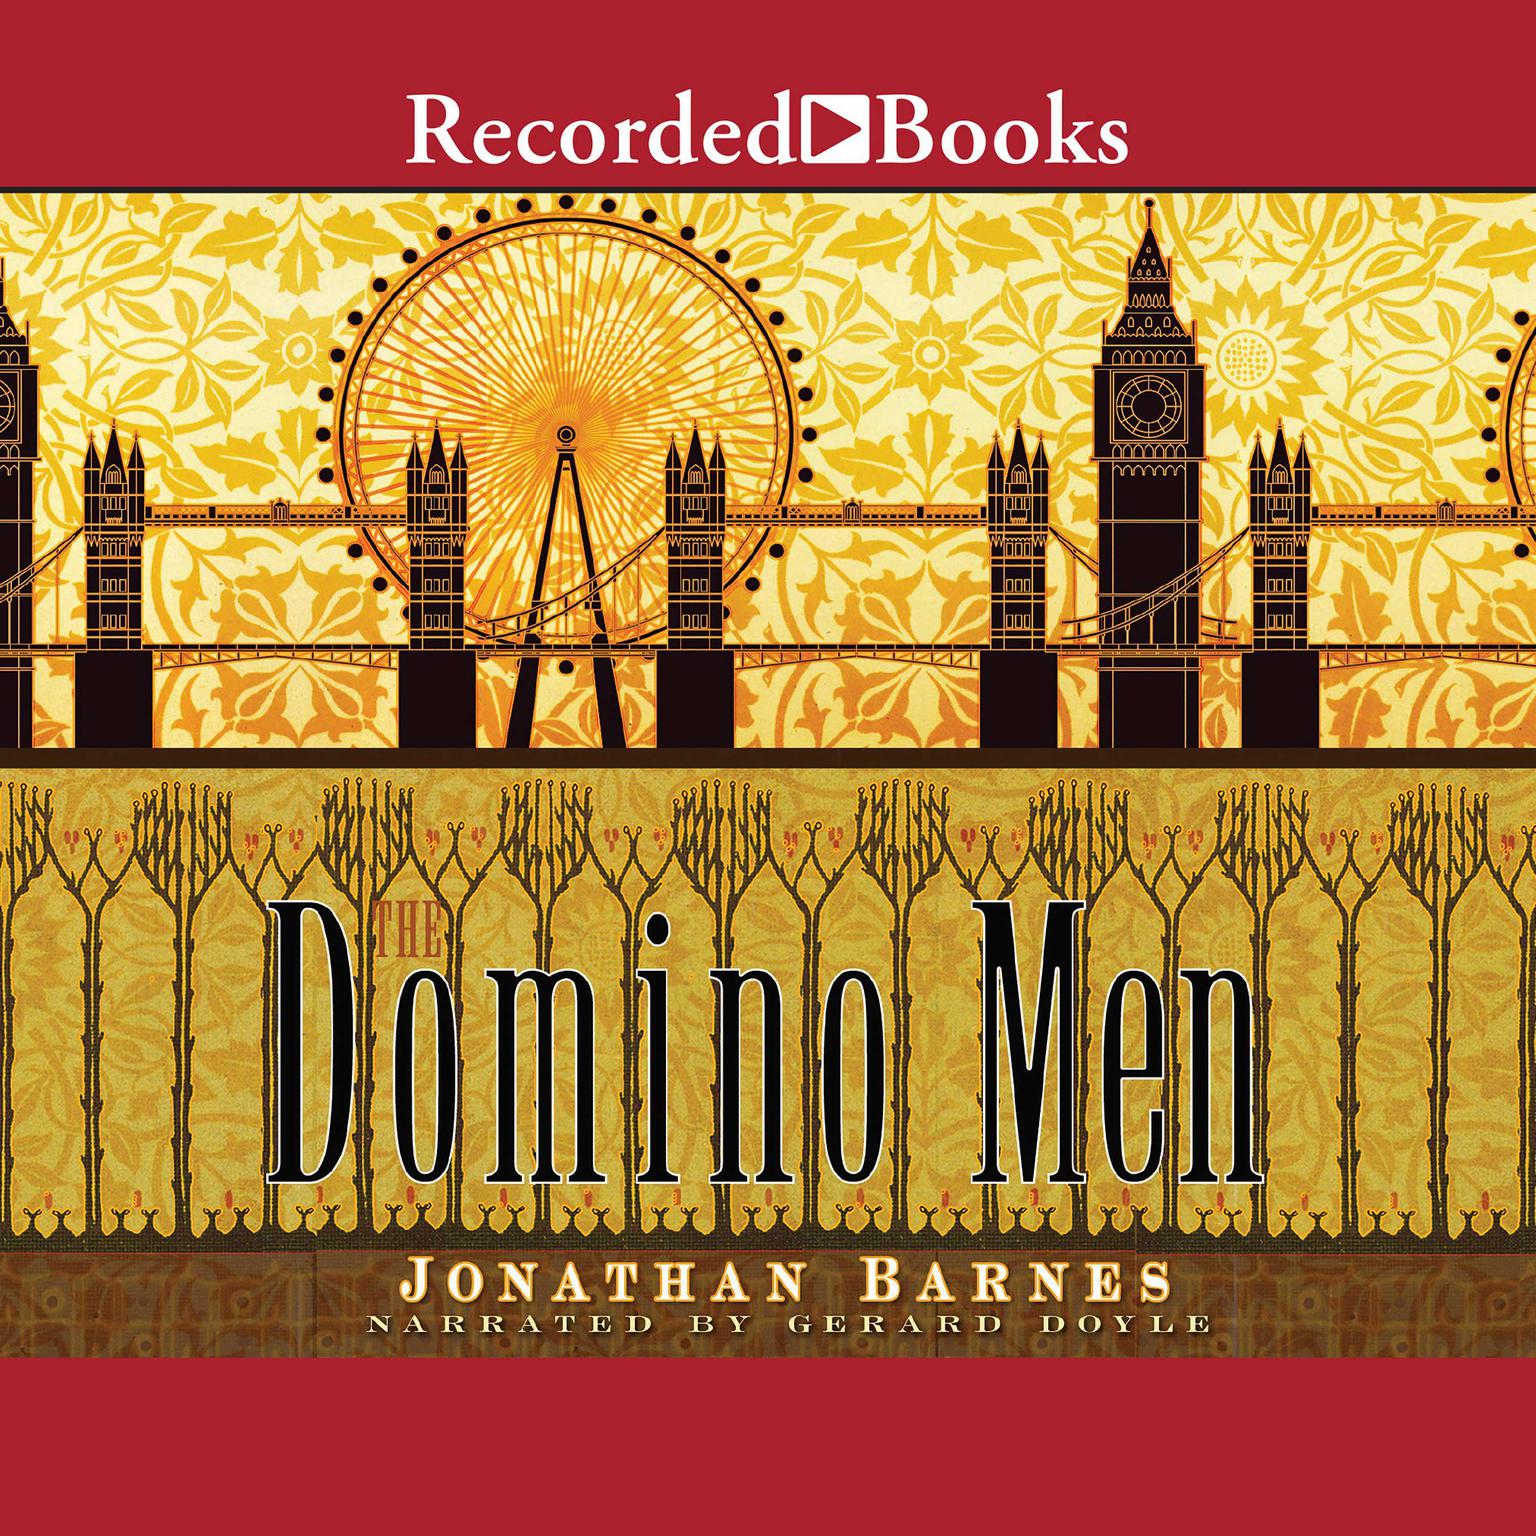 The Domino Men Audiobook, by Jonathan Barnes